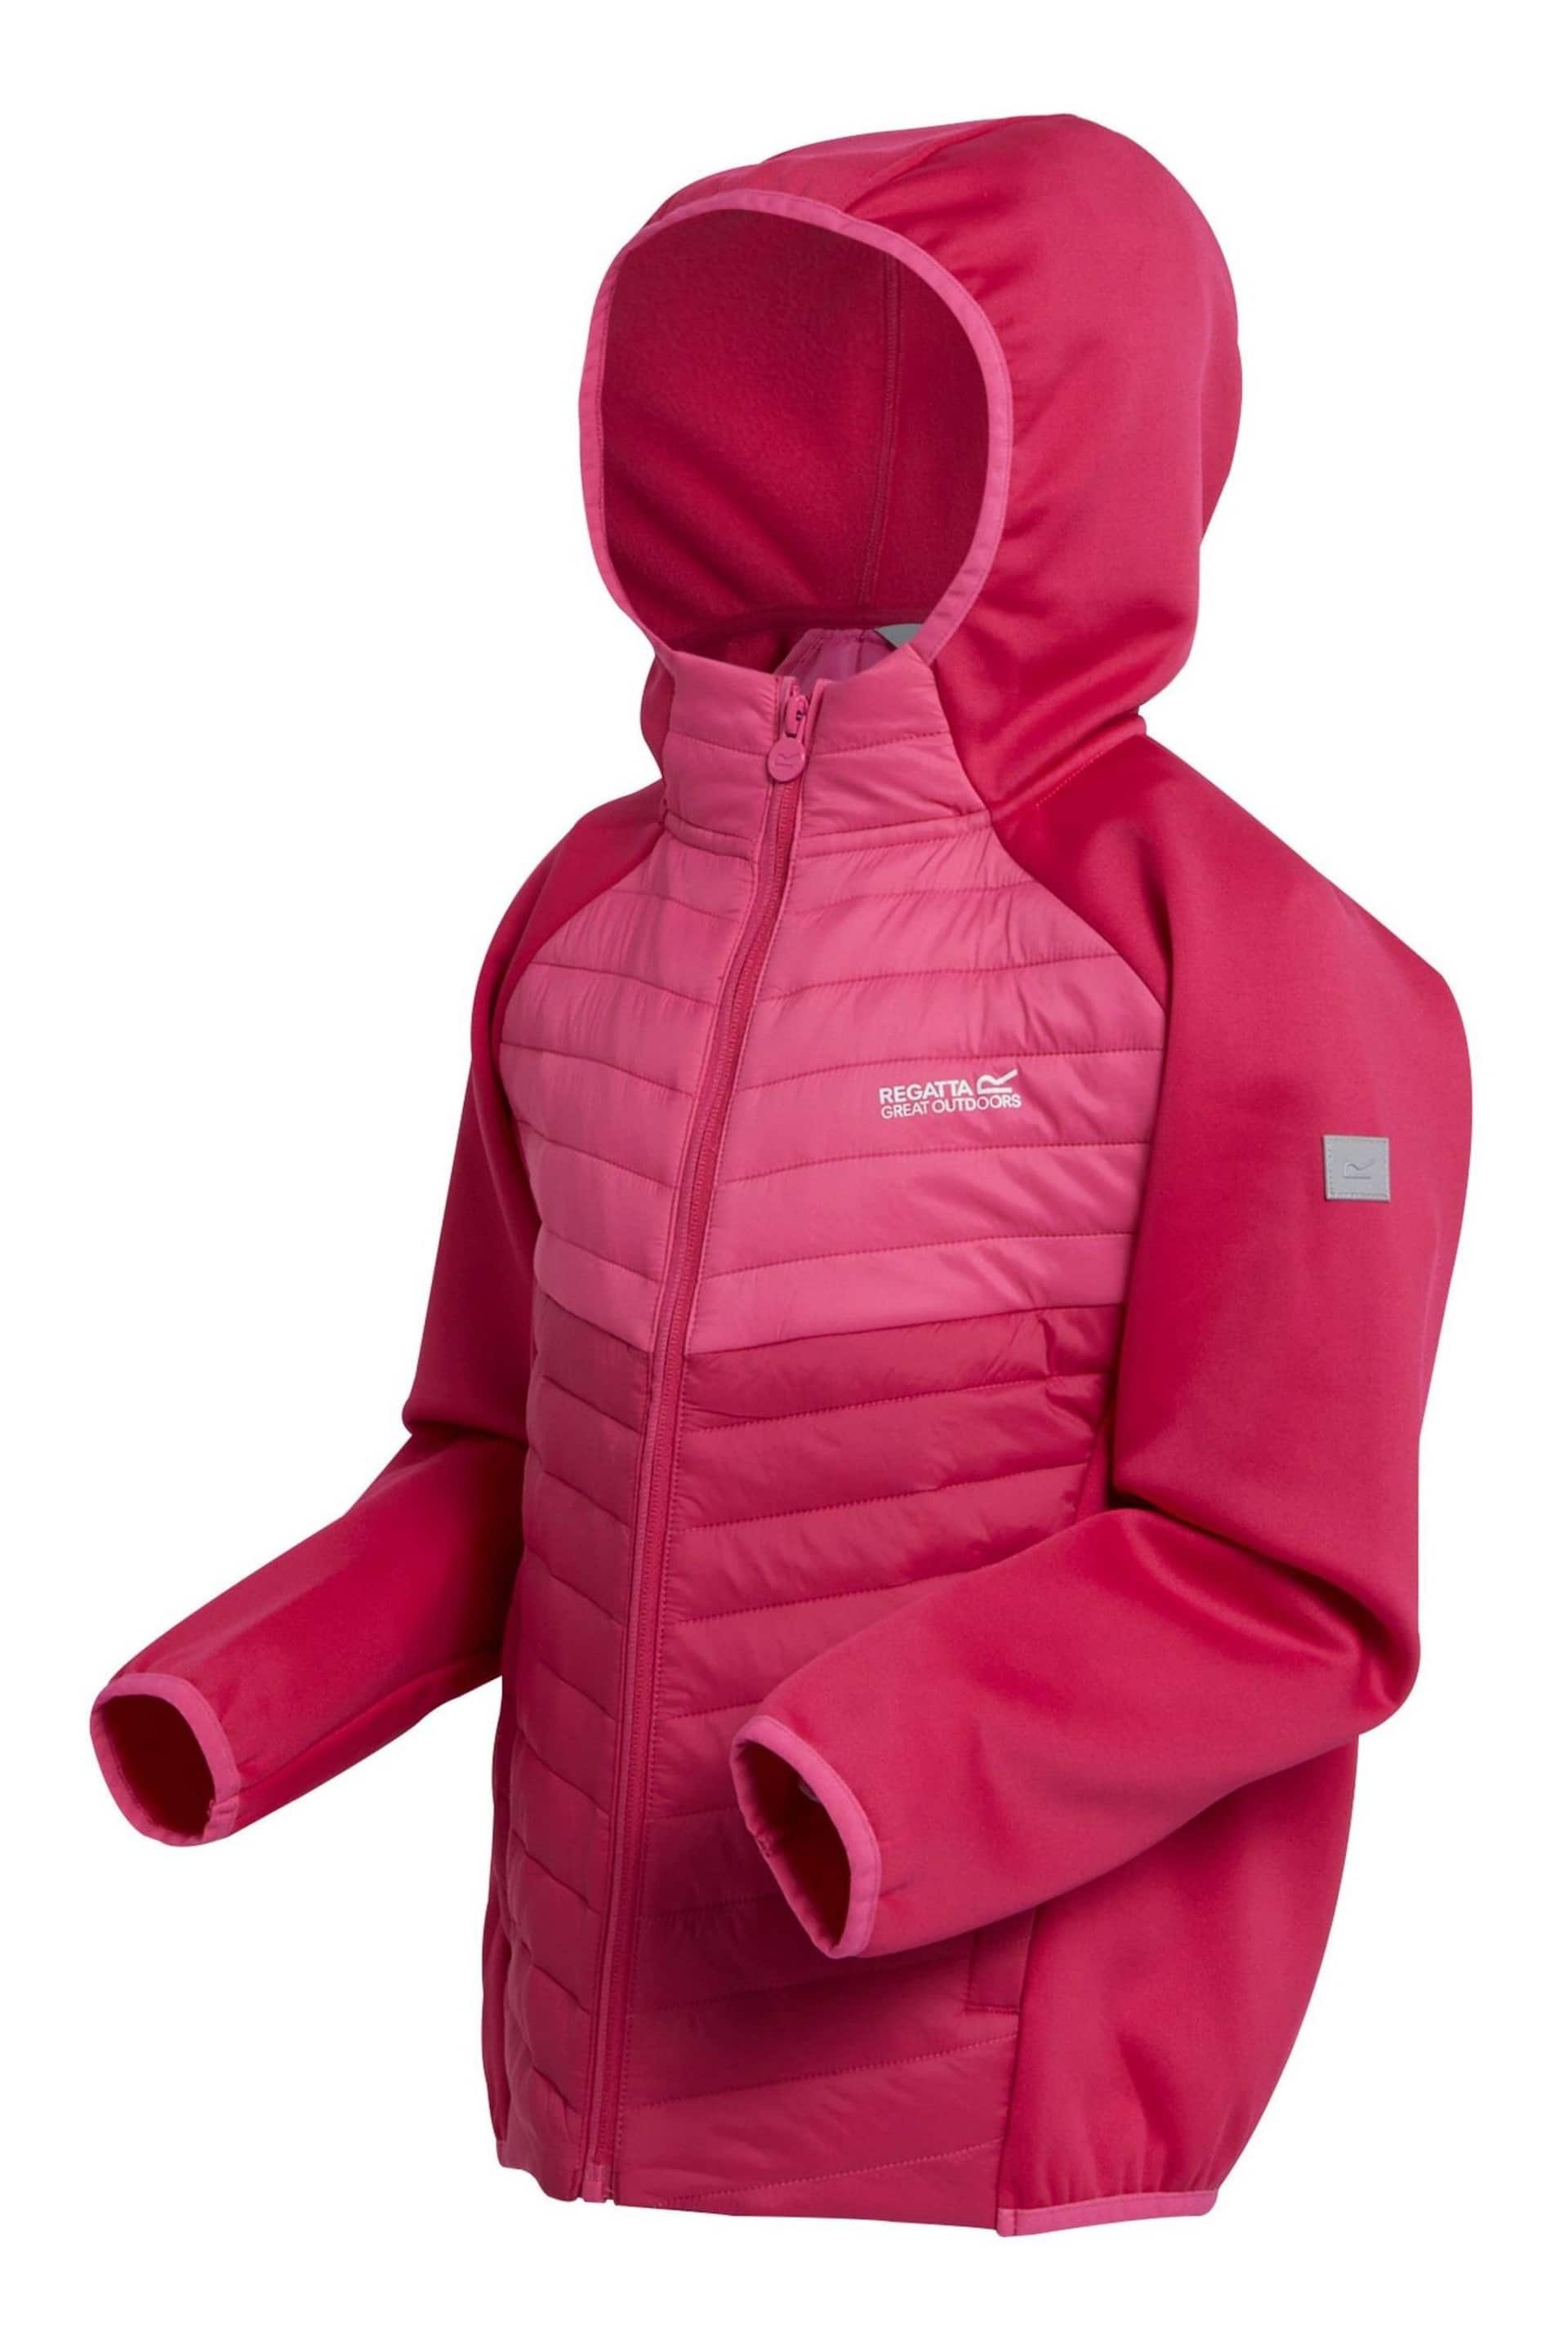 Regatta Pink Kielder Hybrid VIII Stretch Hooded Jacket - Image 7 of 7